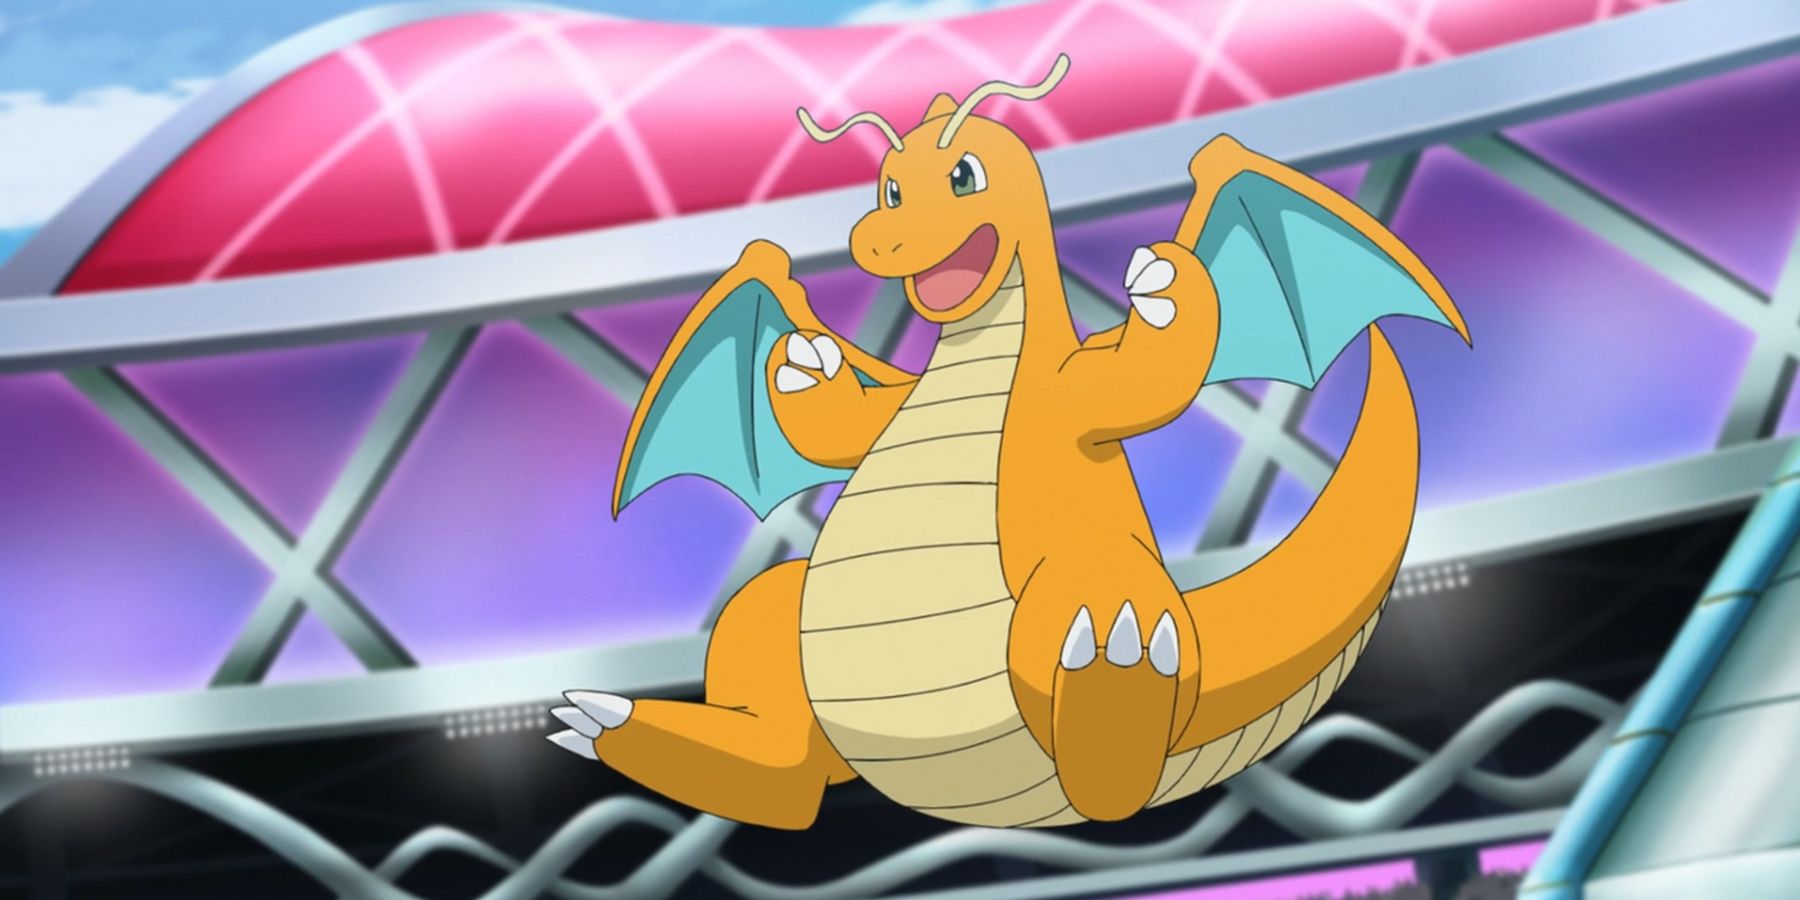 Pokémon's Dragonite Pops Up at Selfridges for Fendi, Frgmt Collaboration